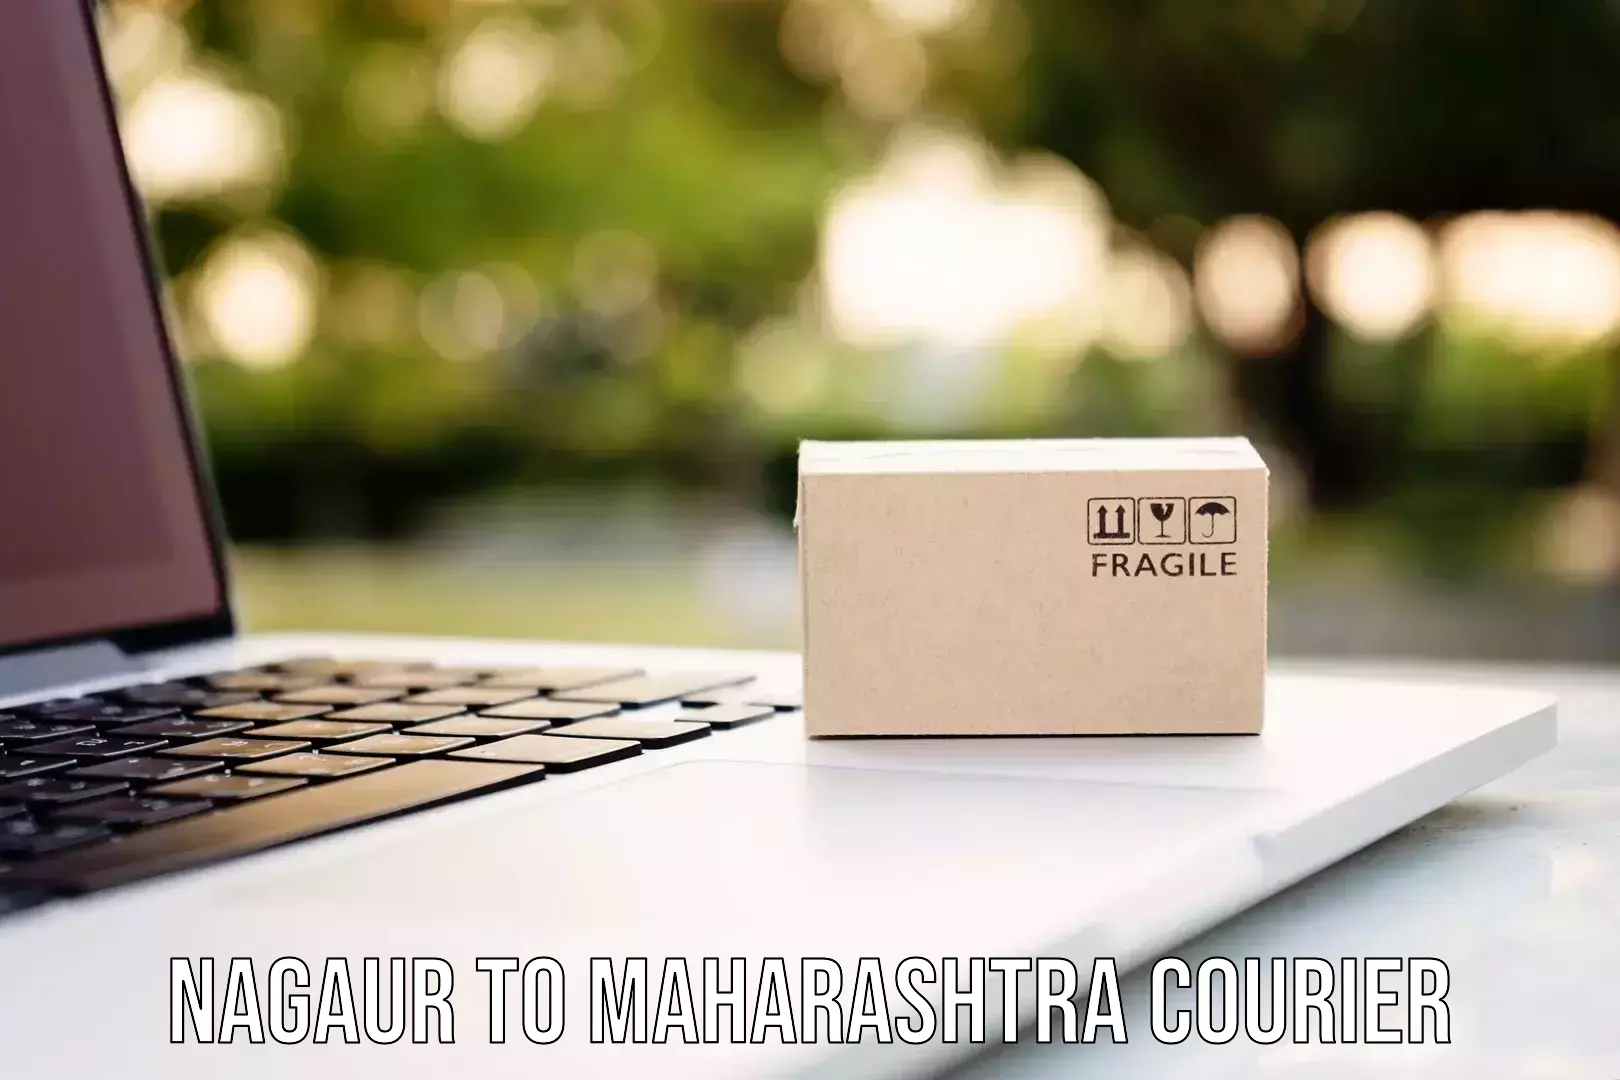 Courier service booking Nagaur to Raigarh Maharashtra